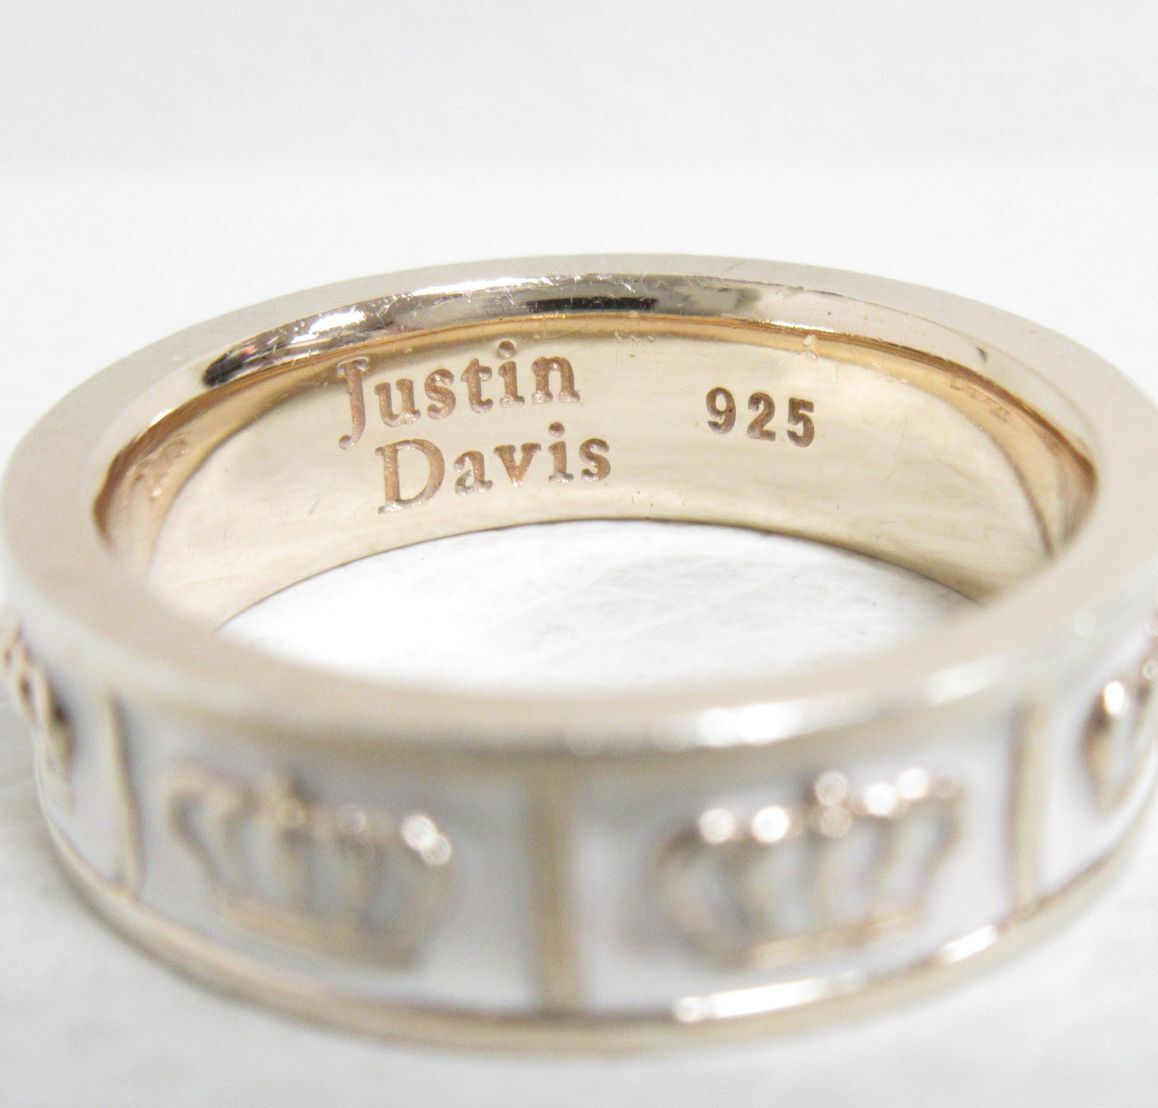 12815◆JUSTIN DAVIS ジャスティンデイビス OBSESSION ピンクフィニッシュWHITE リング/指輪 925 シルバー925【約13号】中古 USEDの画像5